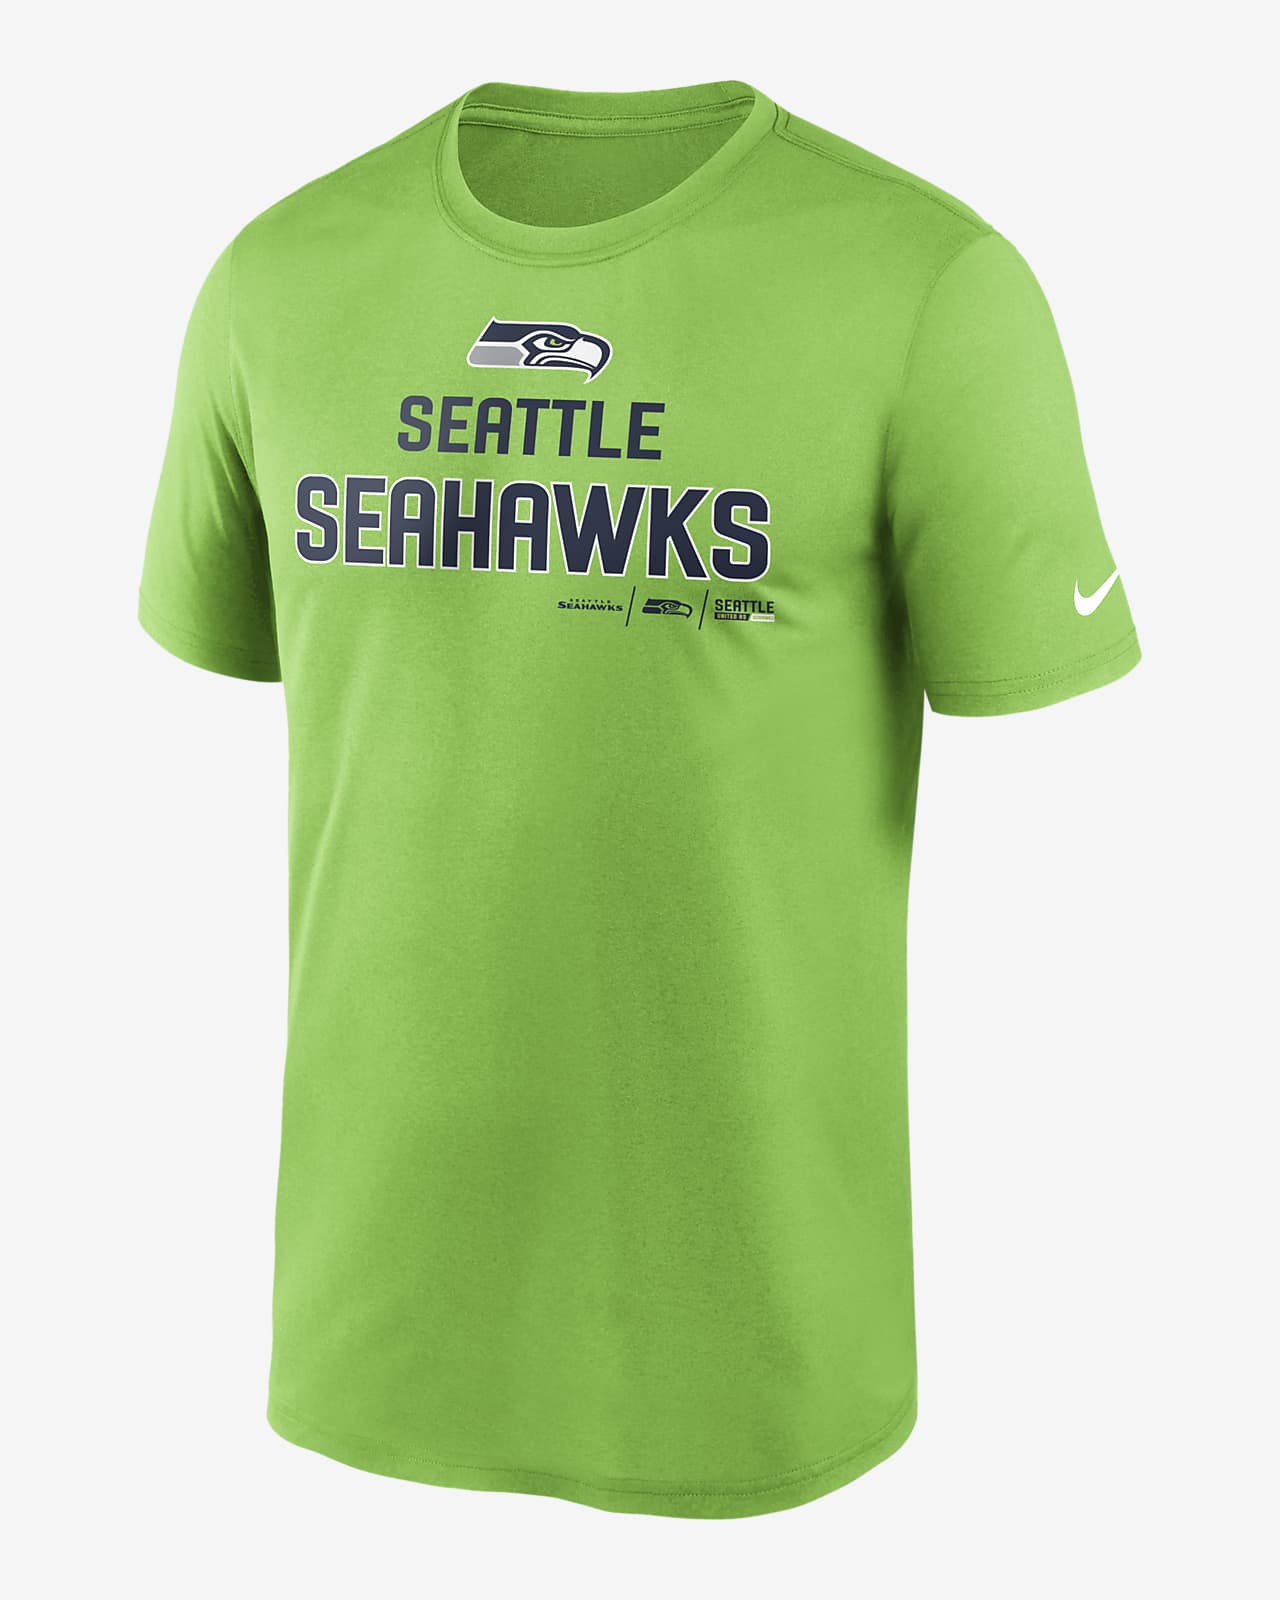 seattle seahawks men's shirt